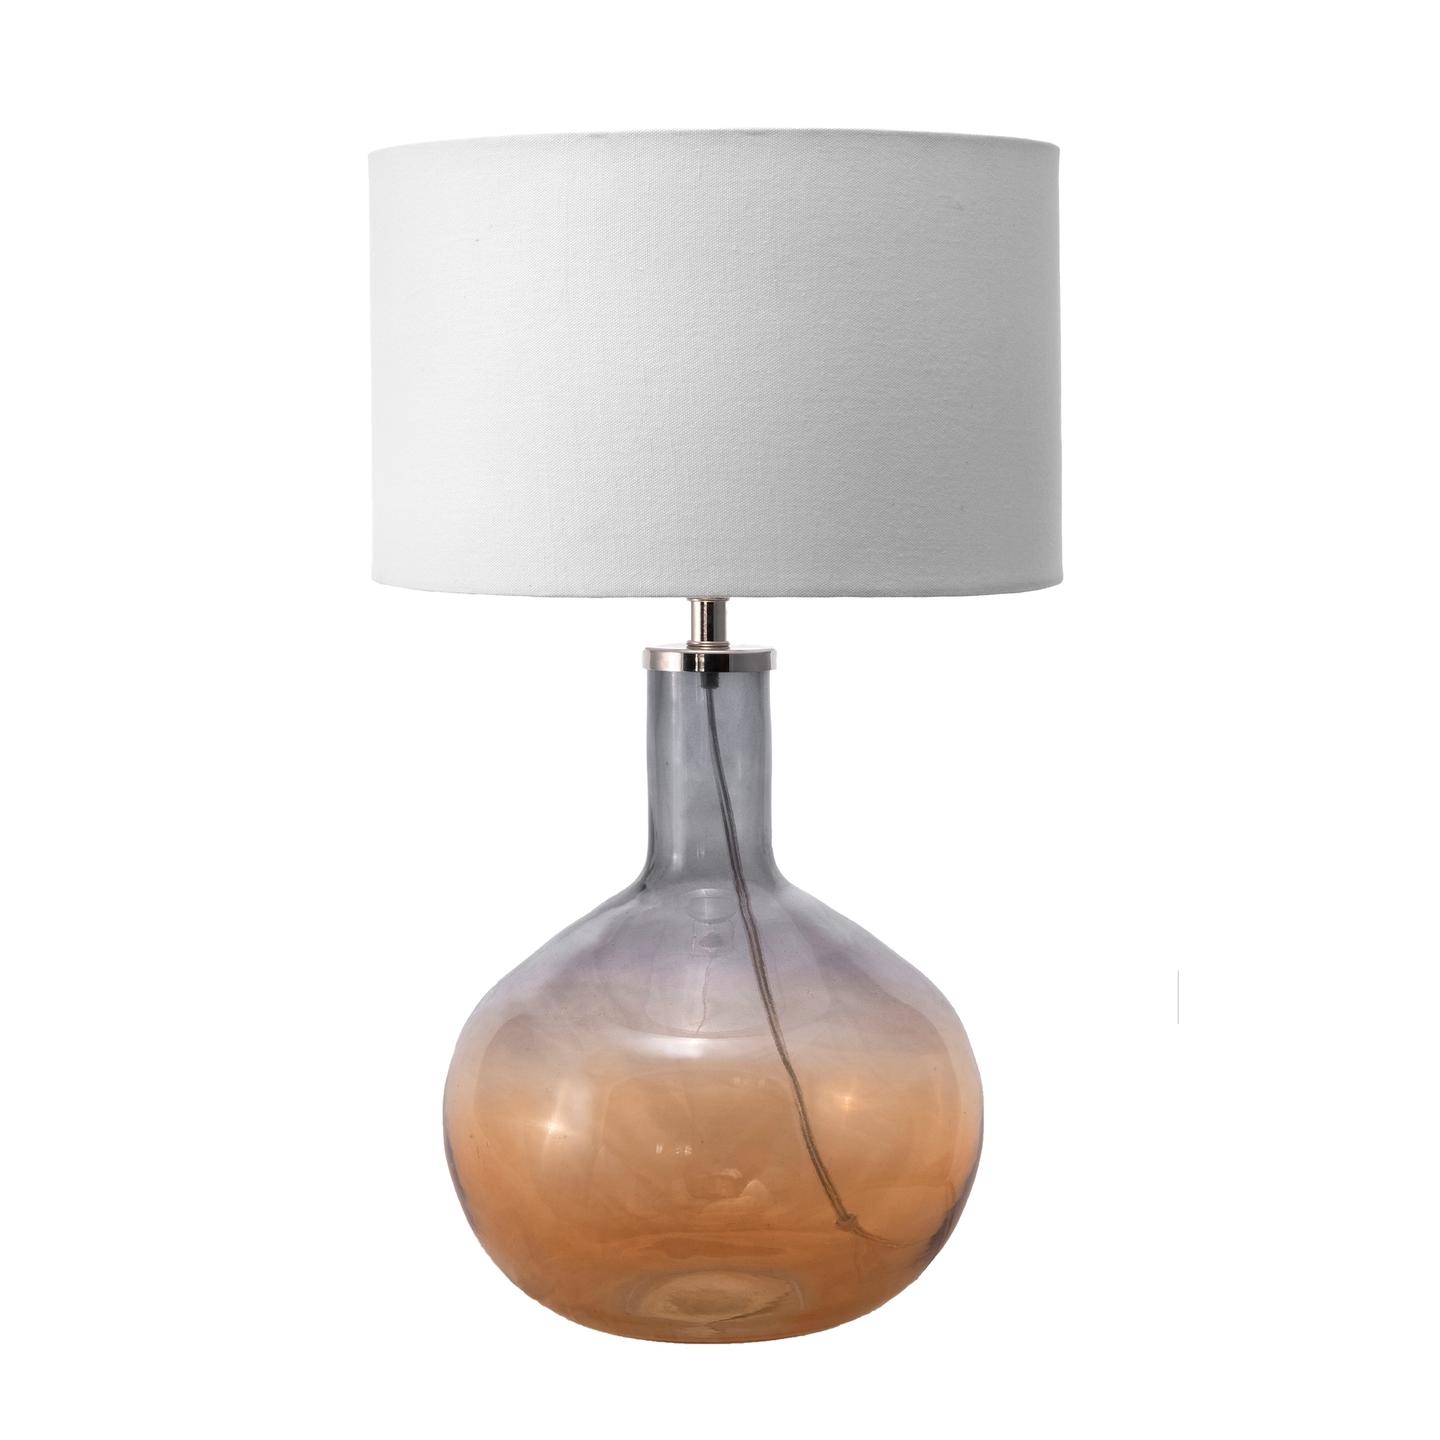 Modesto 21" Glass Table Lamp - Image 2